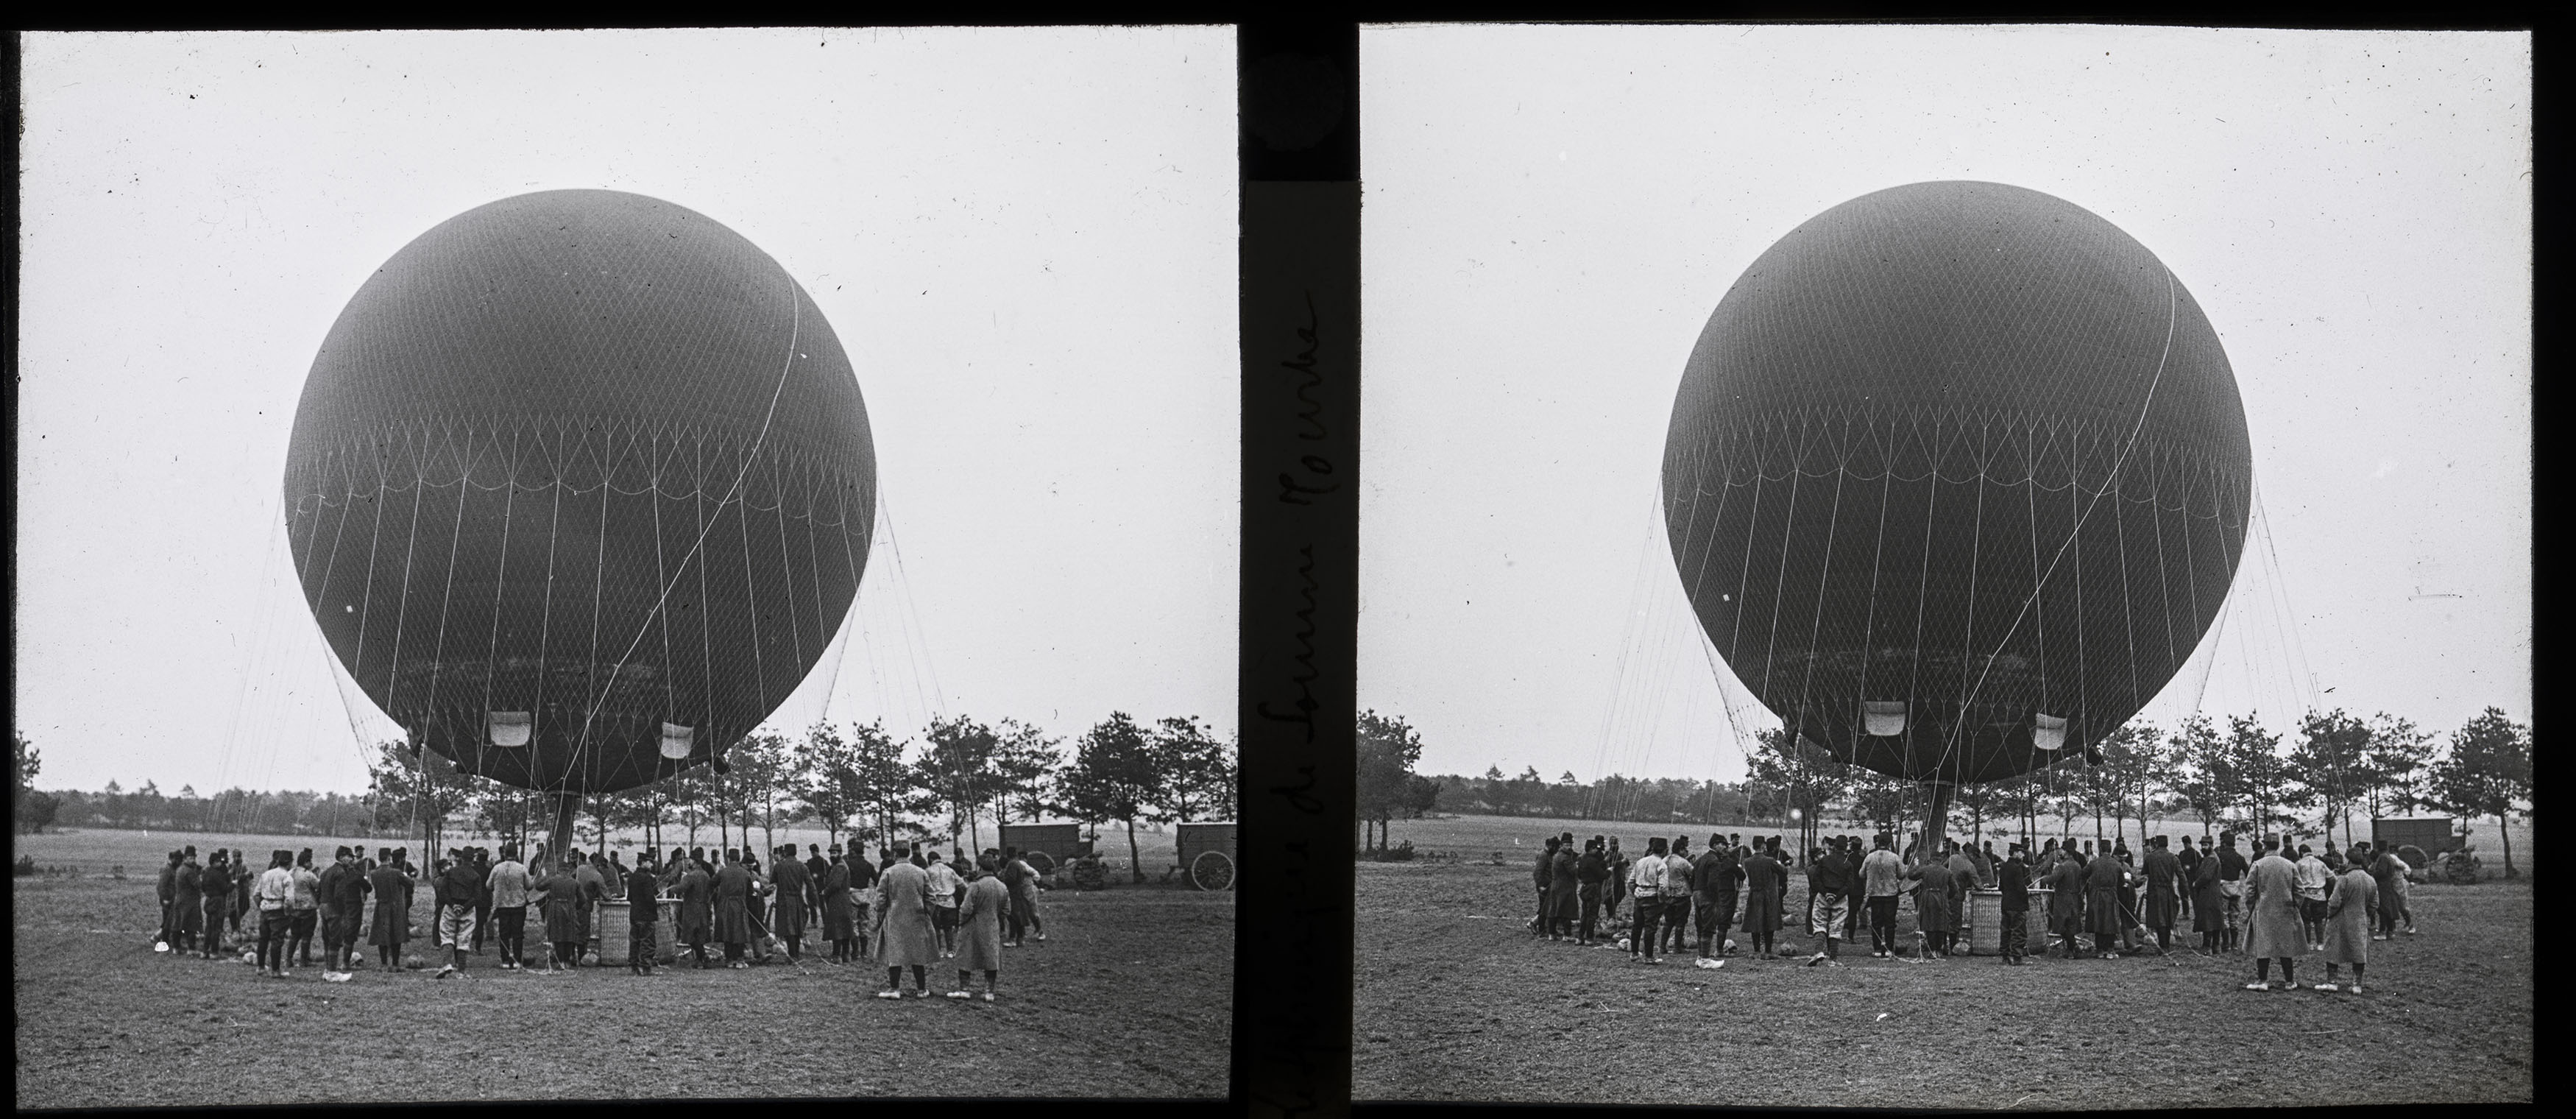 Le Sphérique de Somme Mourka - Spherical balloon at the Somme (Mourka?)